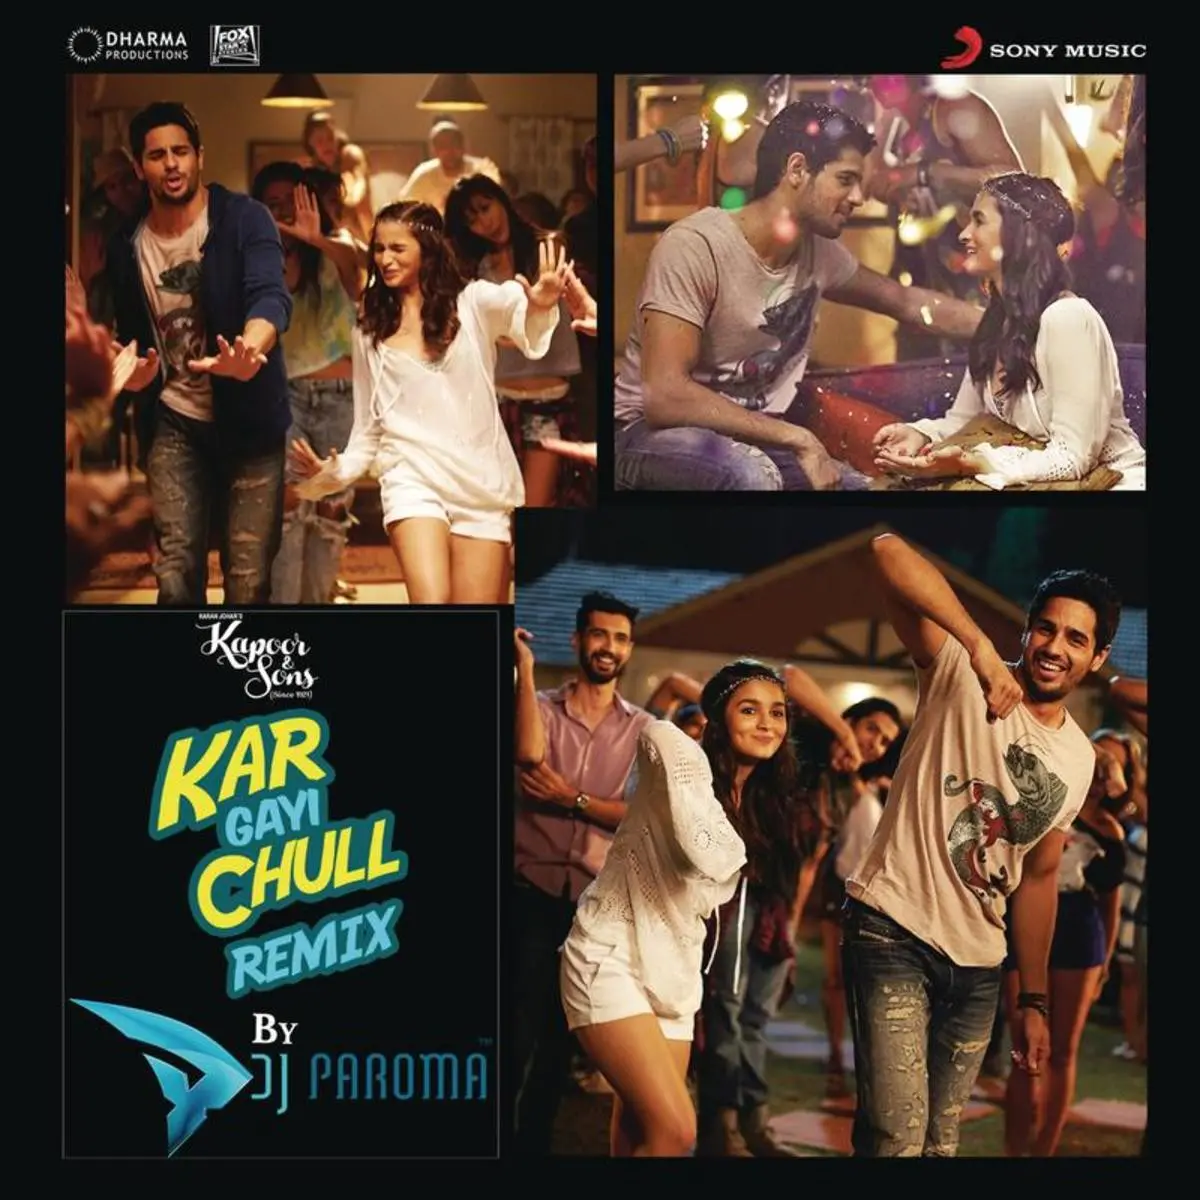 Kar Gayi Chull Remix By Dj Paroma From Kapoor Sons Since 1921 Lyrics In Hindi Kar Gayi Chull Remix By Dj Paroma From Kapoor Sons Since 1921 Kar Gayi Chull